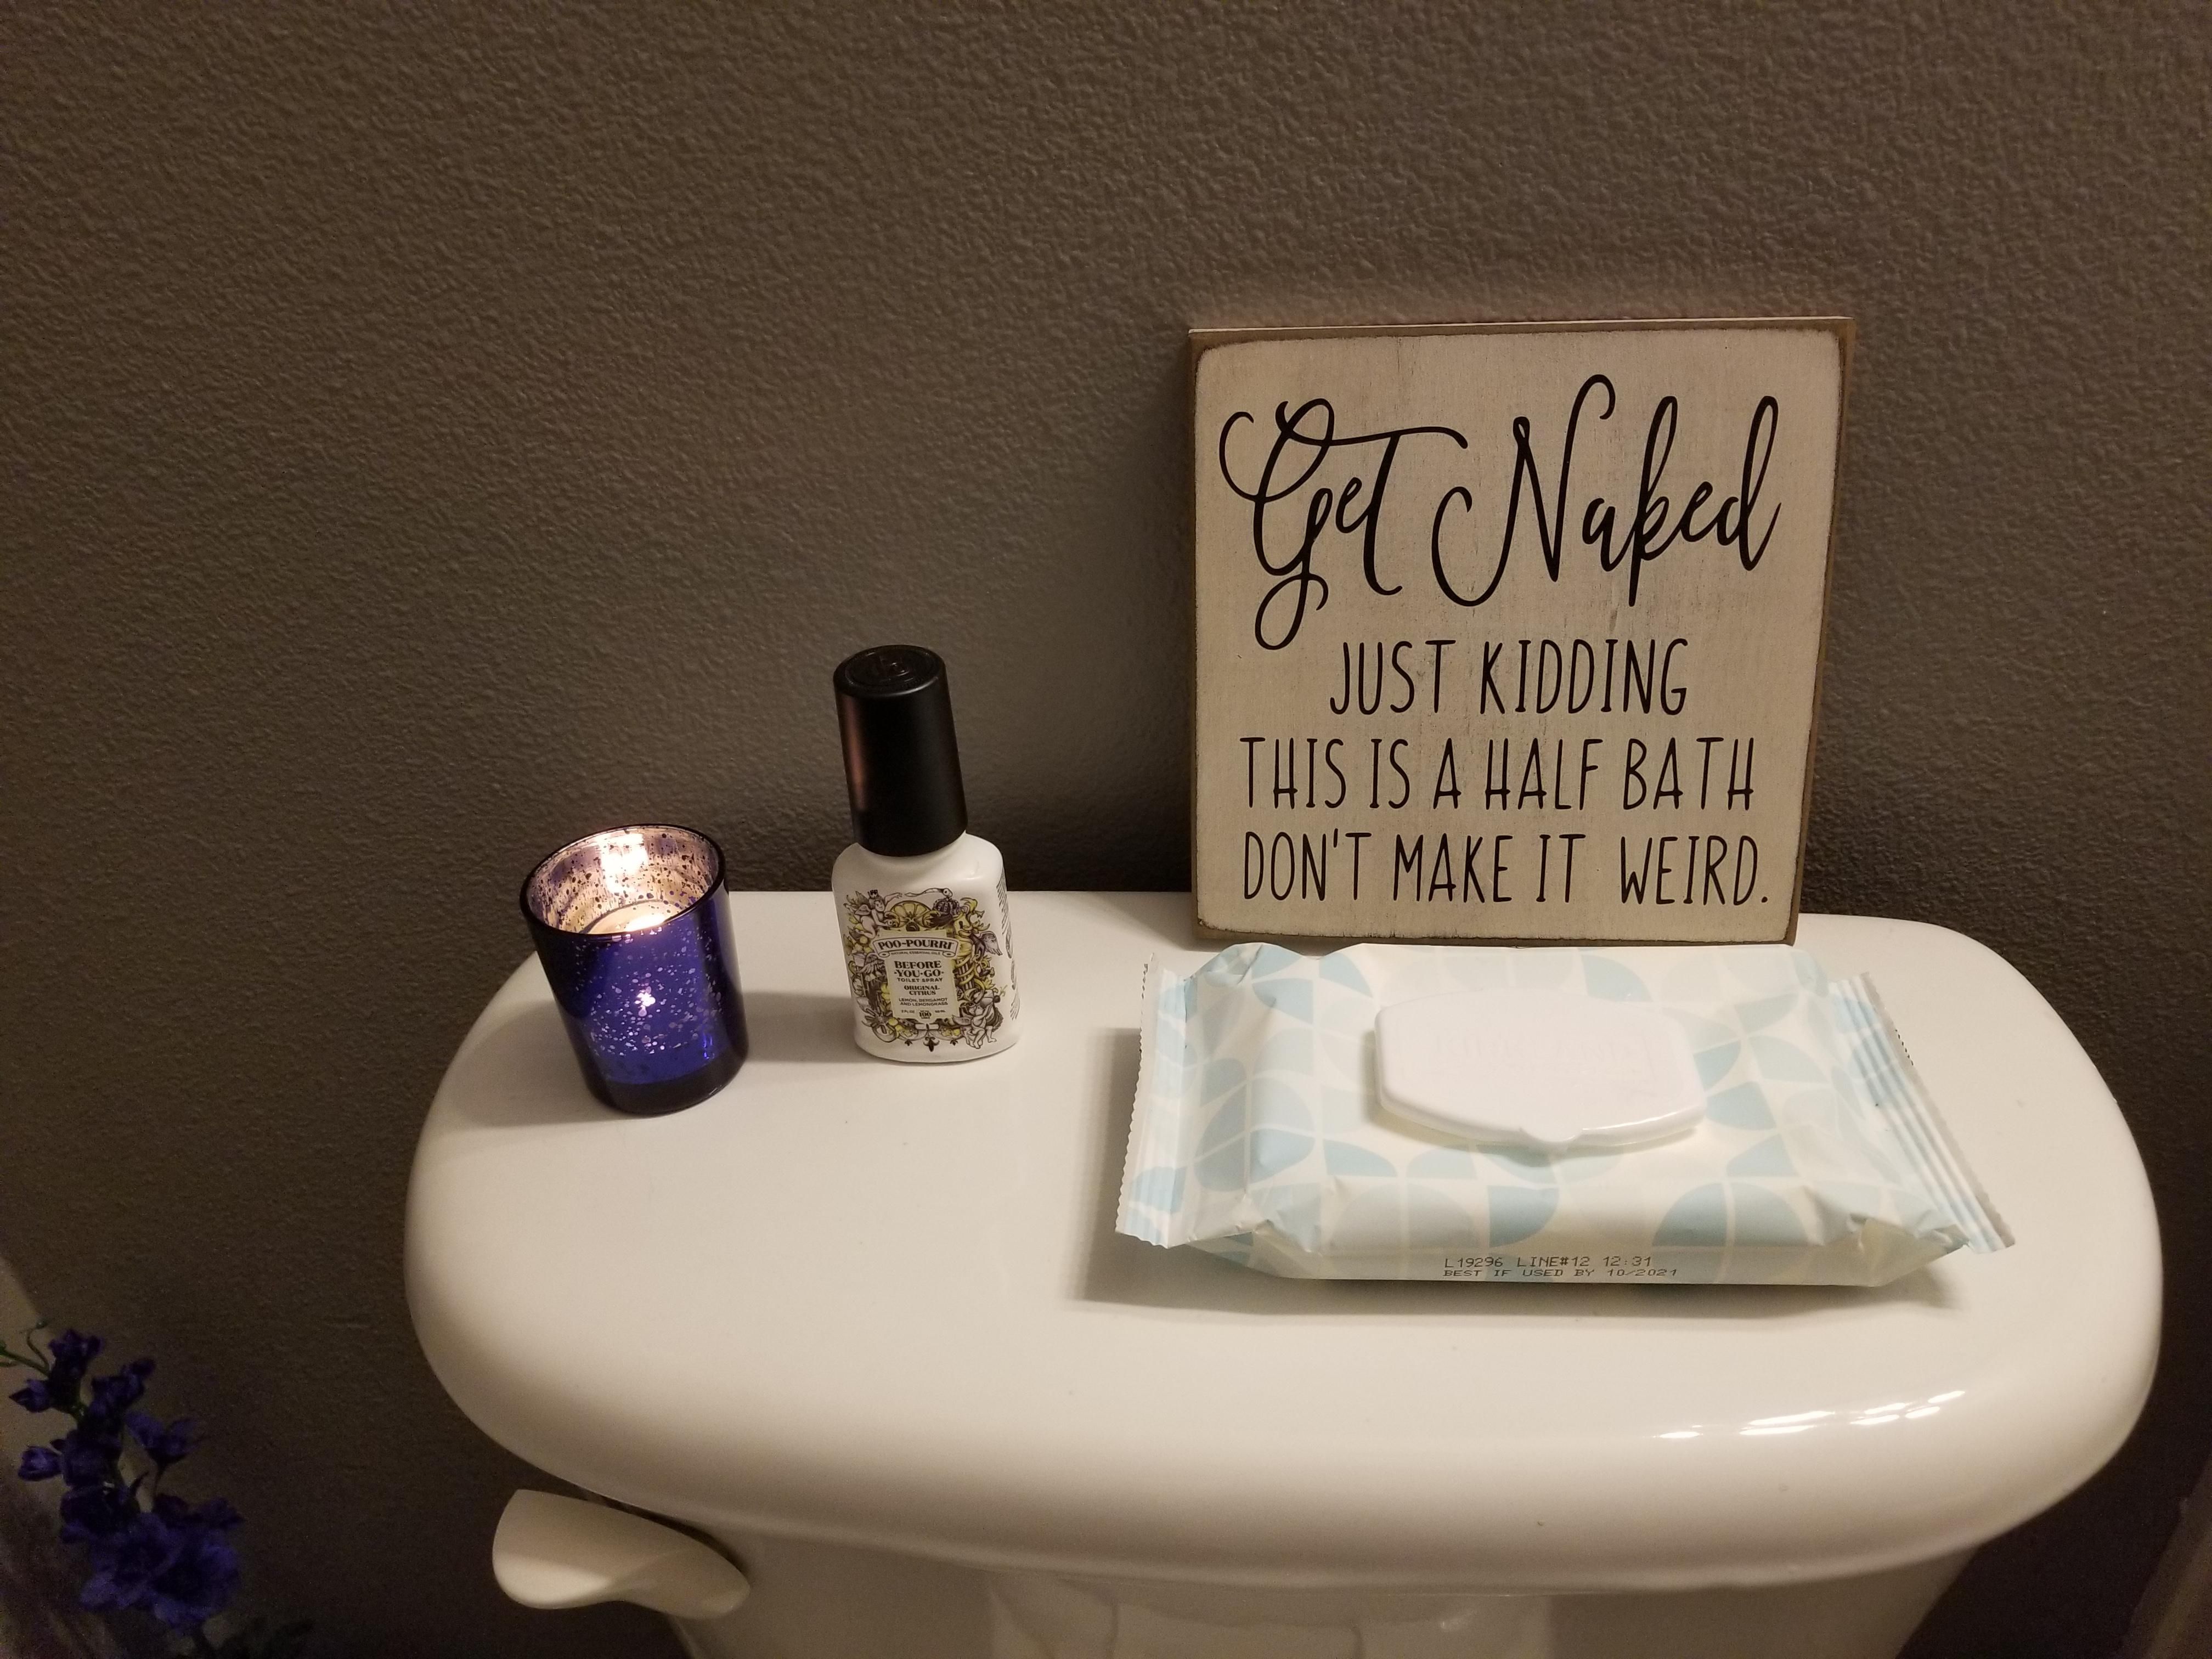 My wife's new bathroom sign.